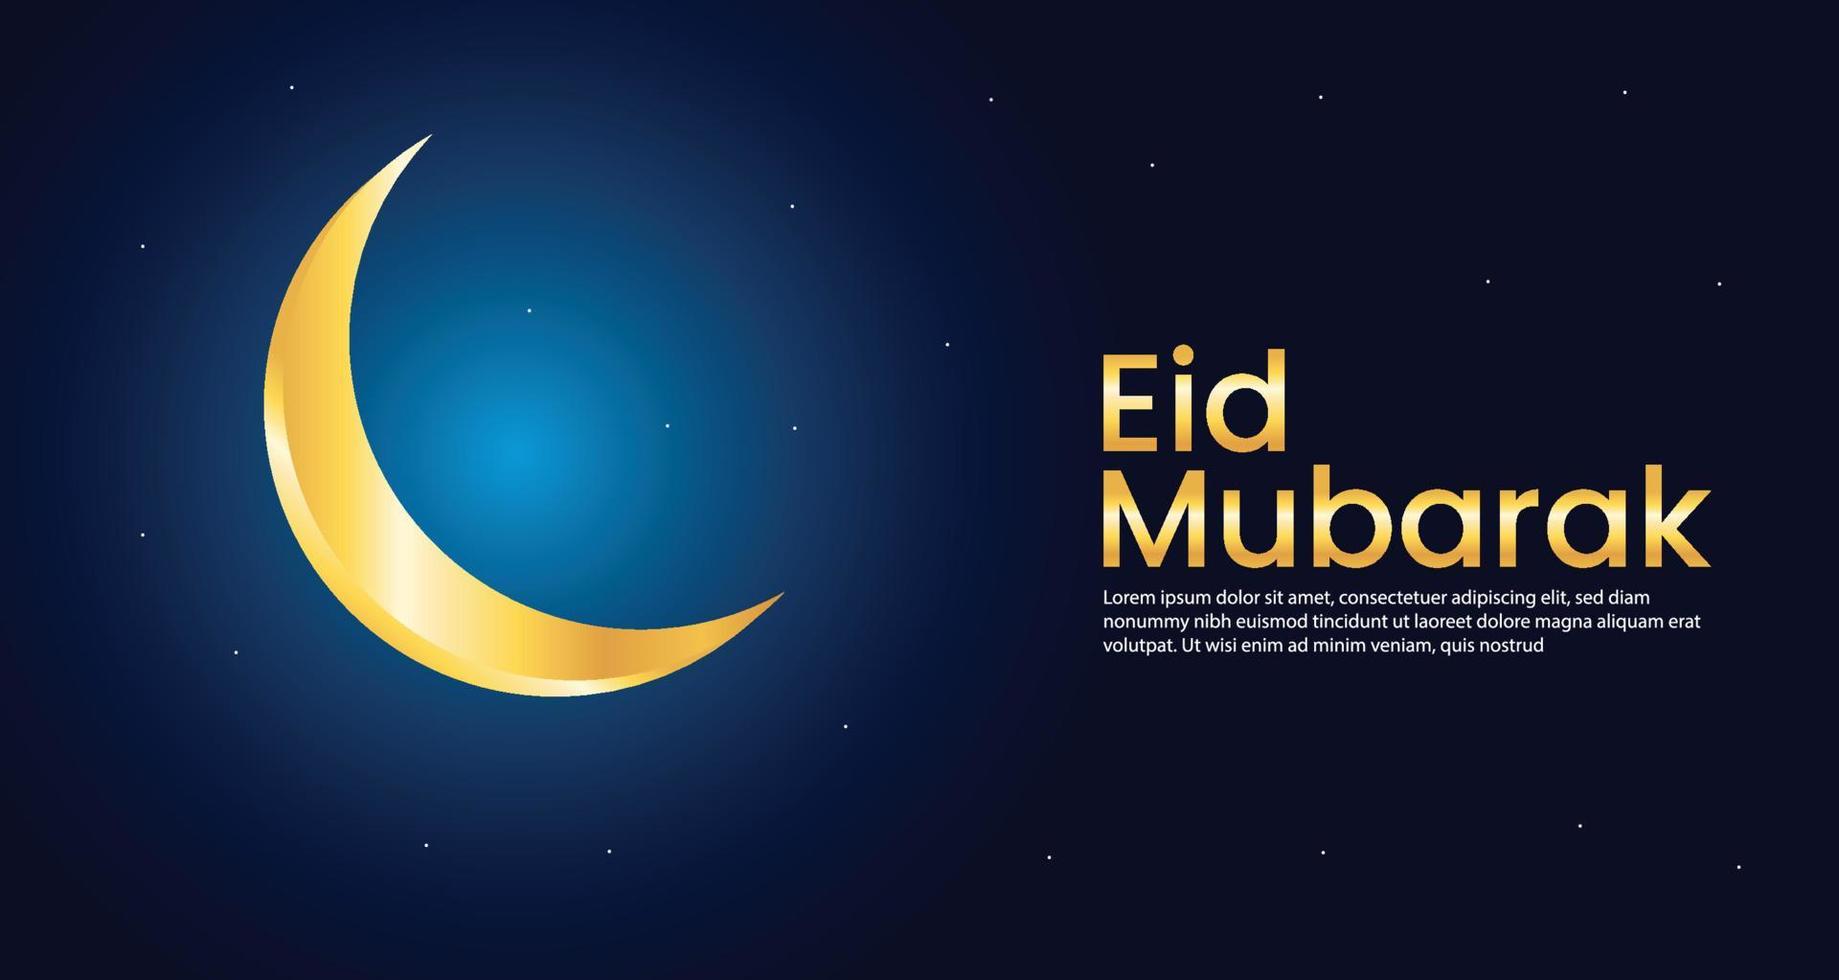 Eid Mubarak Background Design Template vector